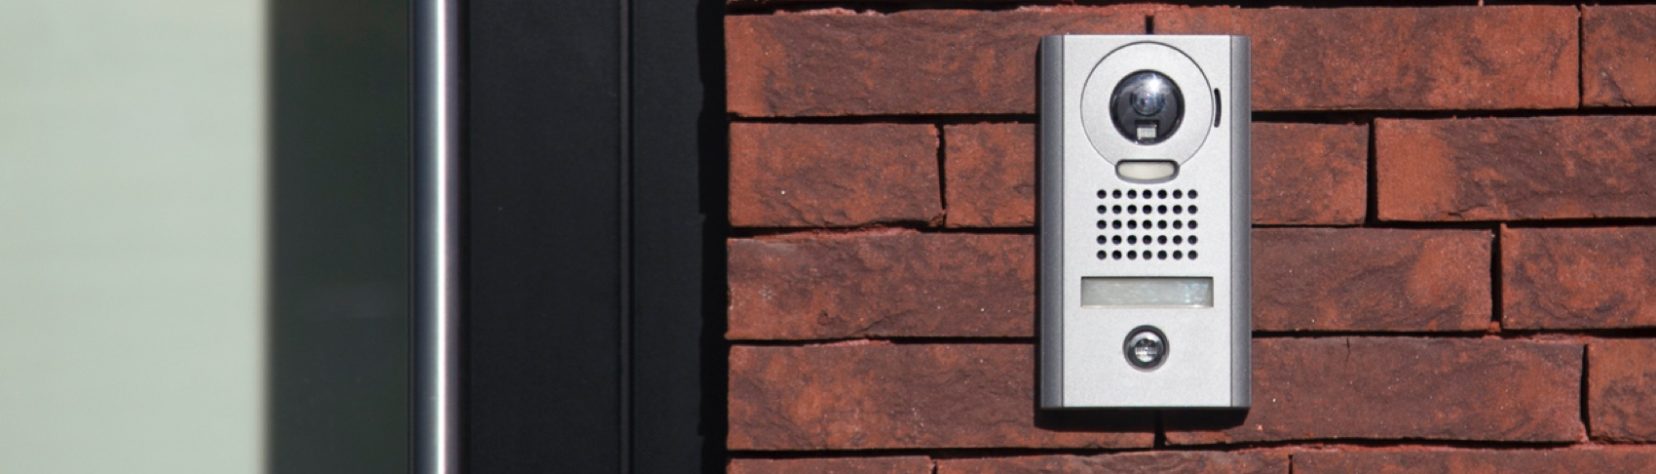 smart doorbell video camera on the wall